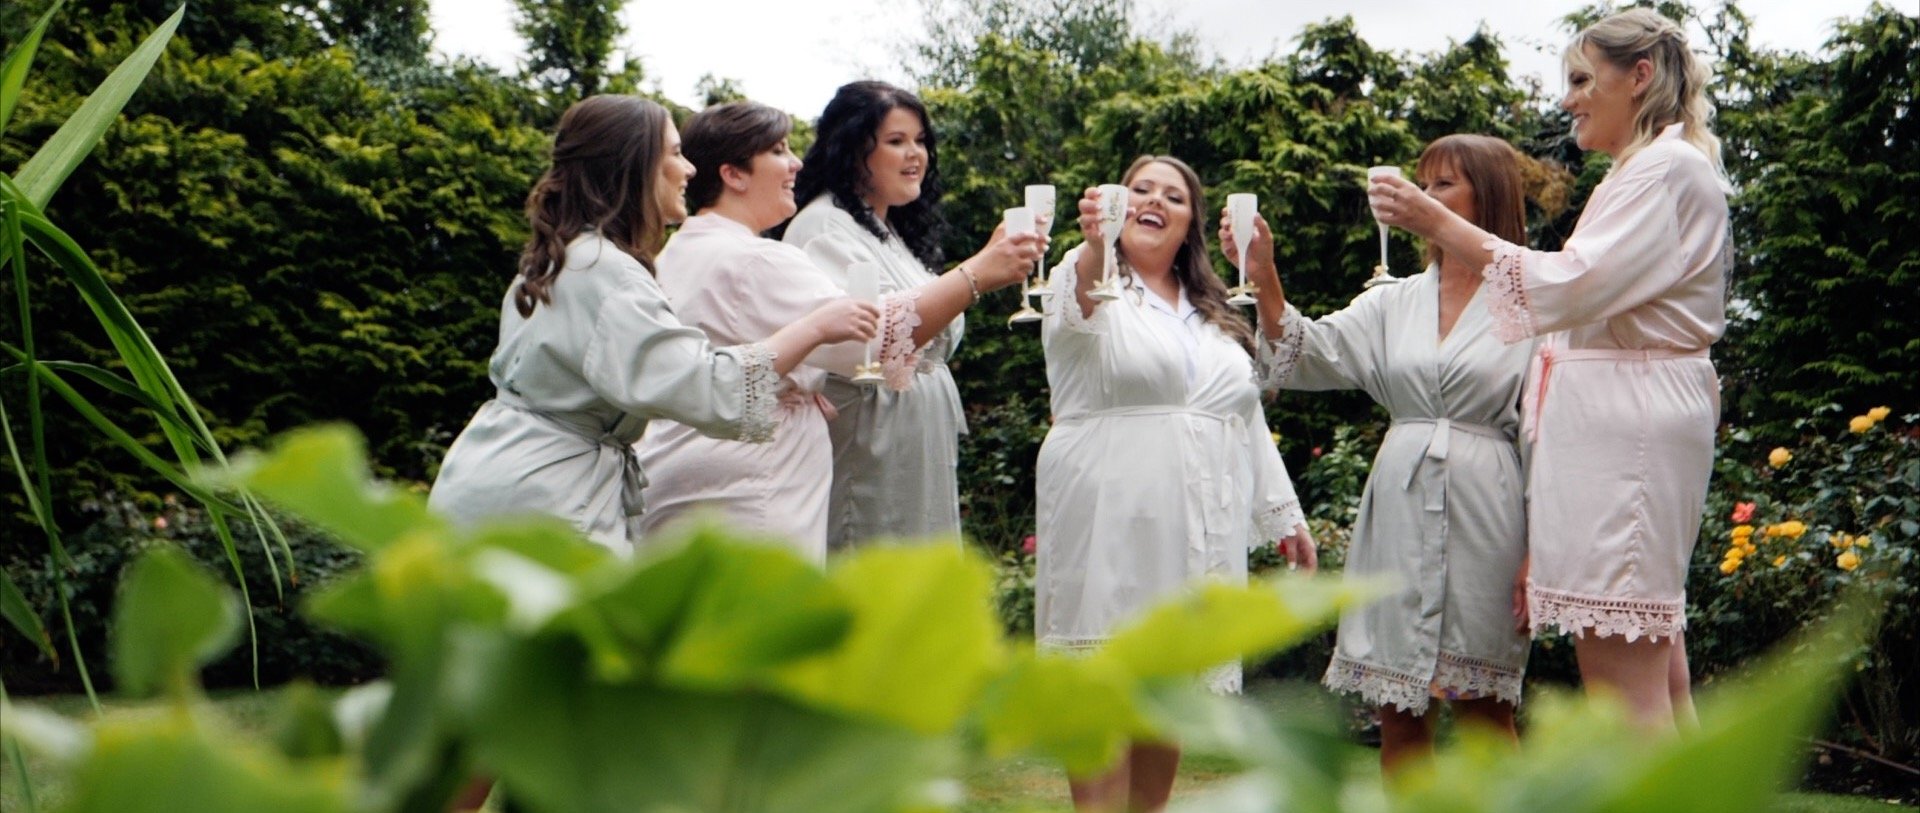 Wedding celebrations video Essex 3 Cheers Media.jpg